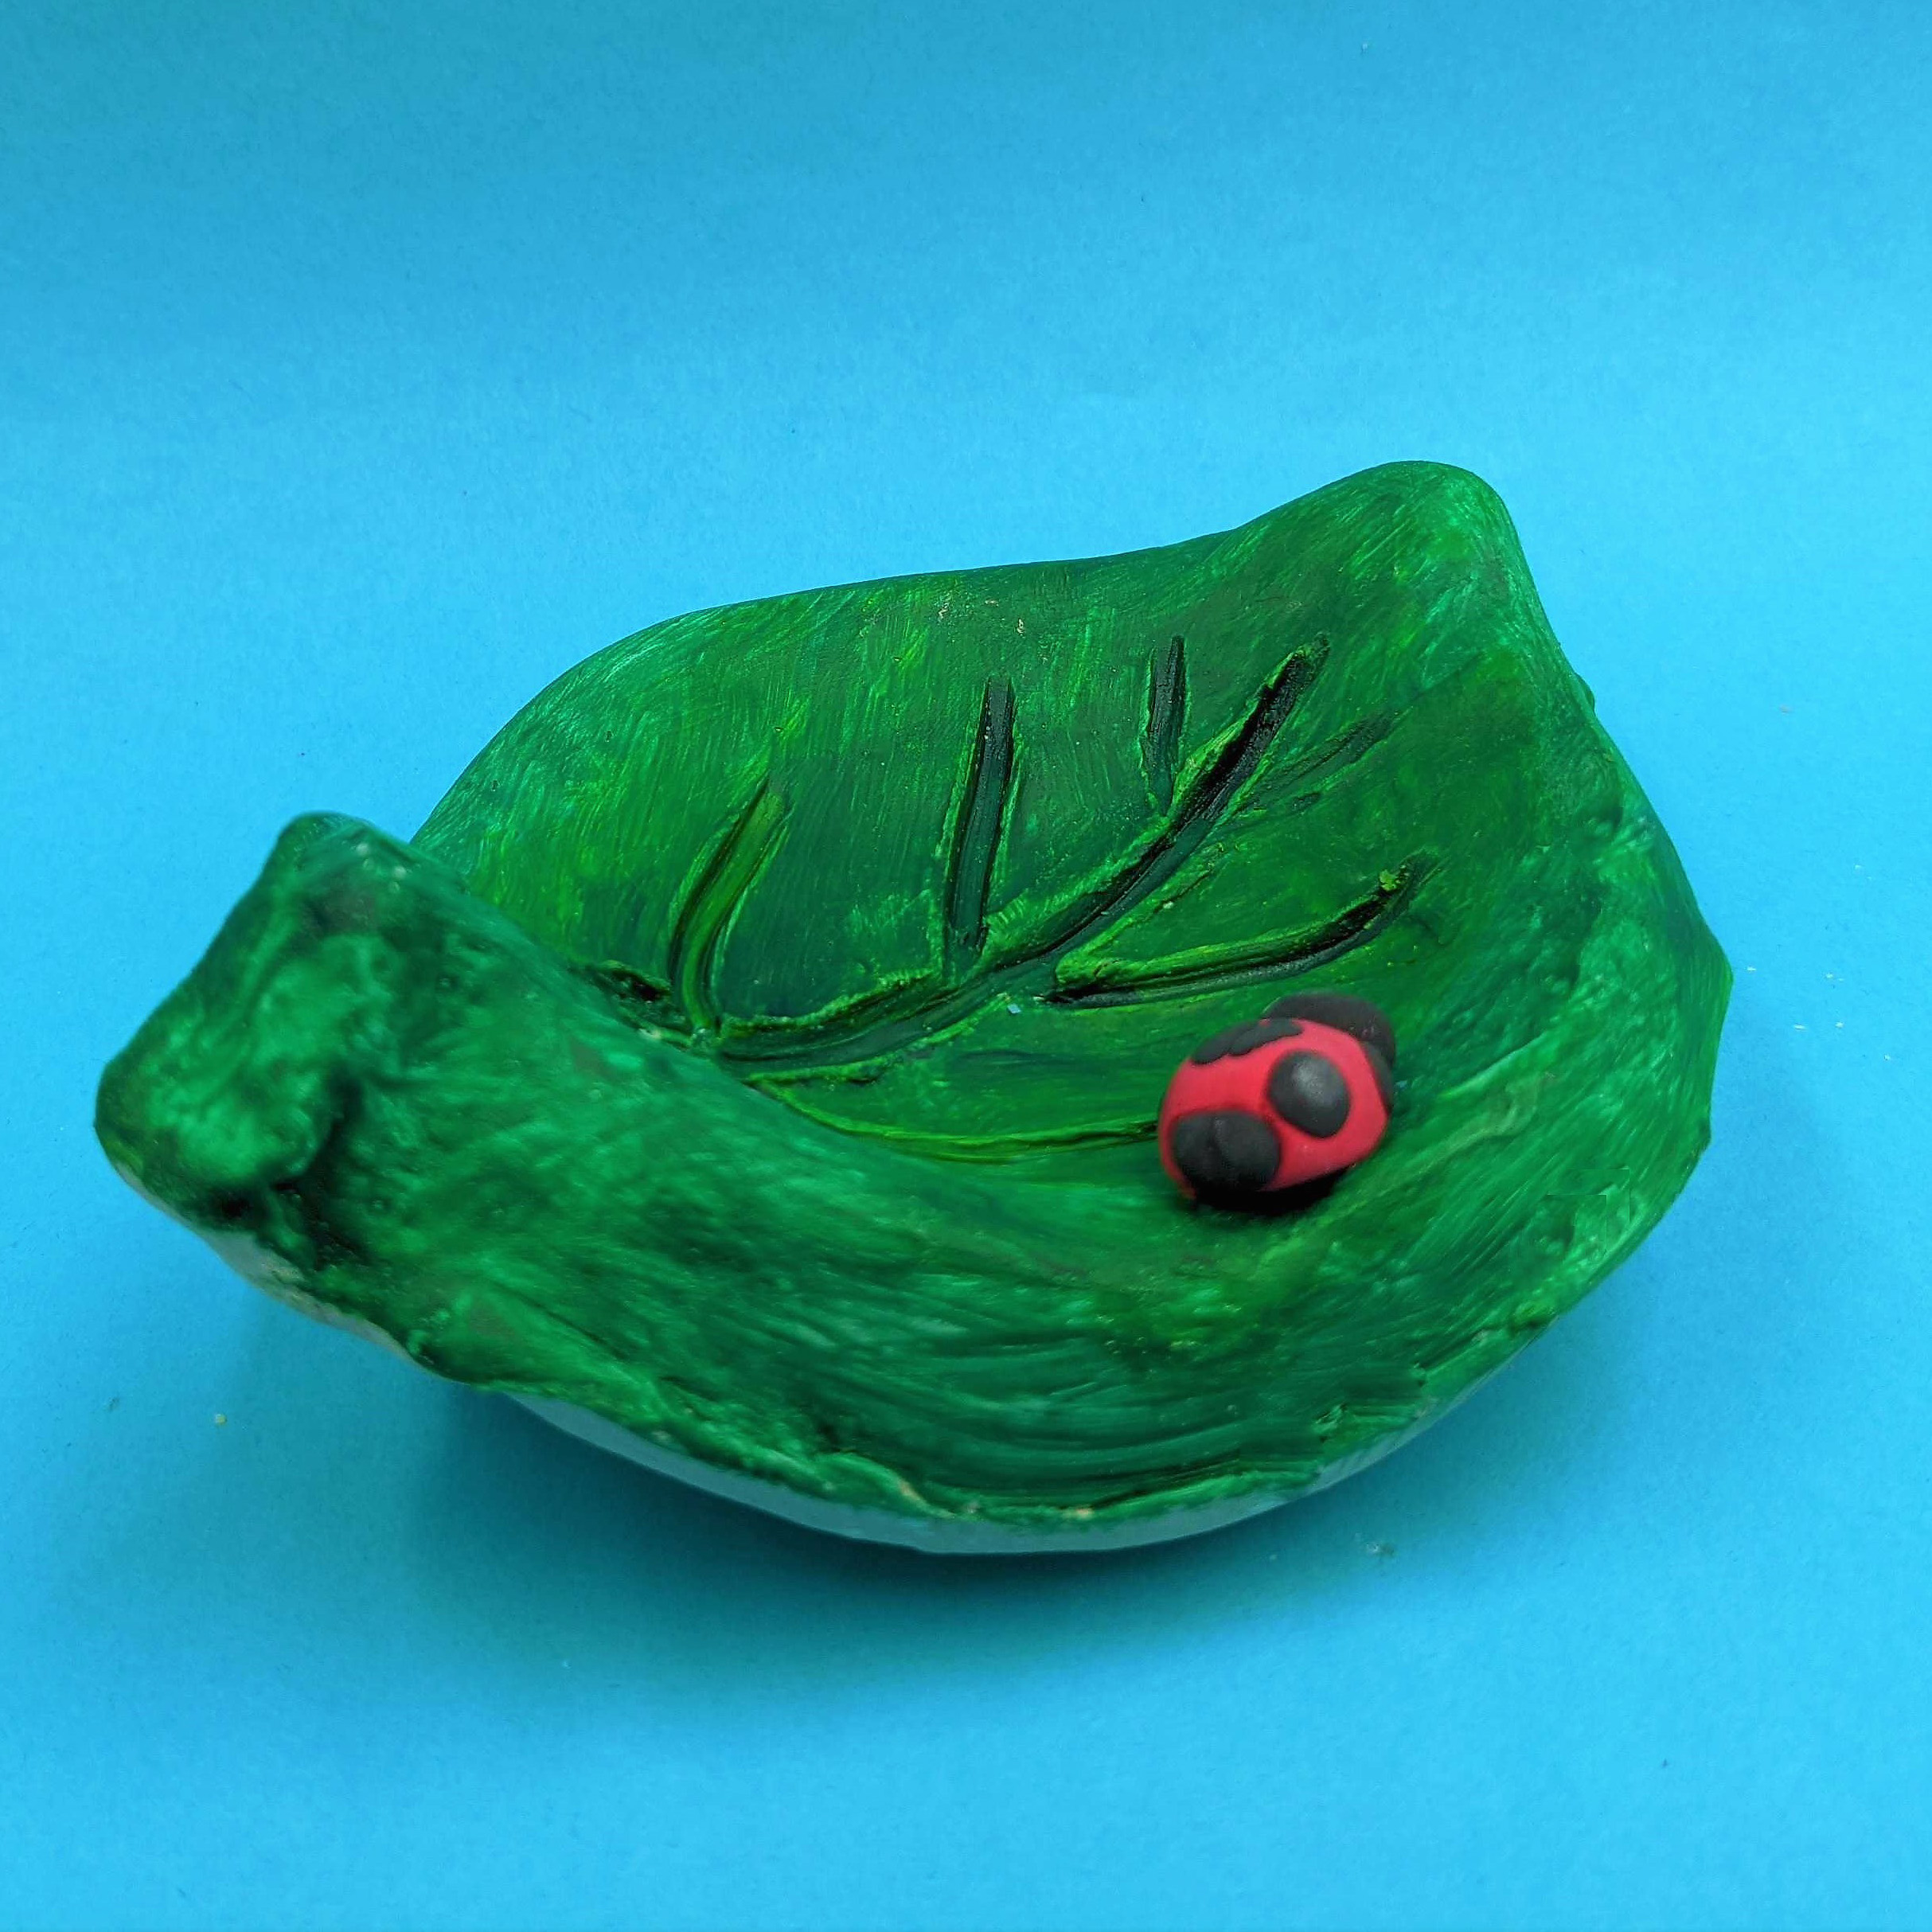 Kidcreate Mobile Studio - Kansas City, Leaf bowl Art Project